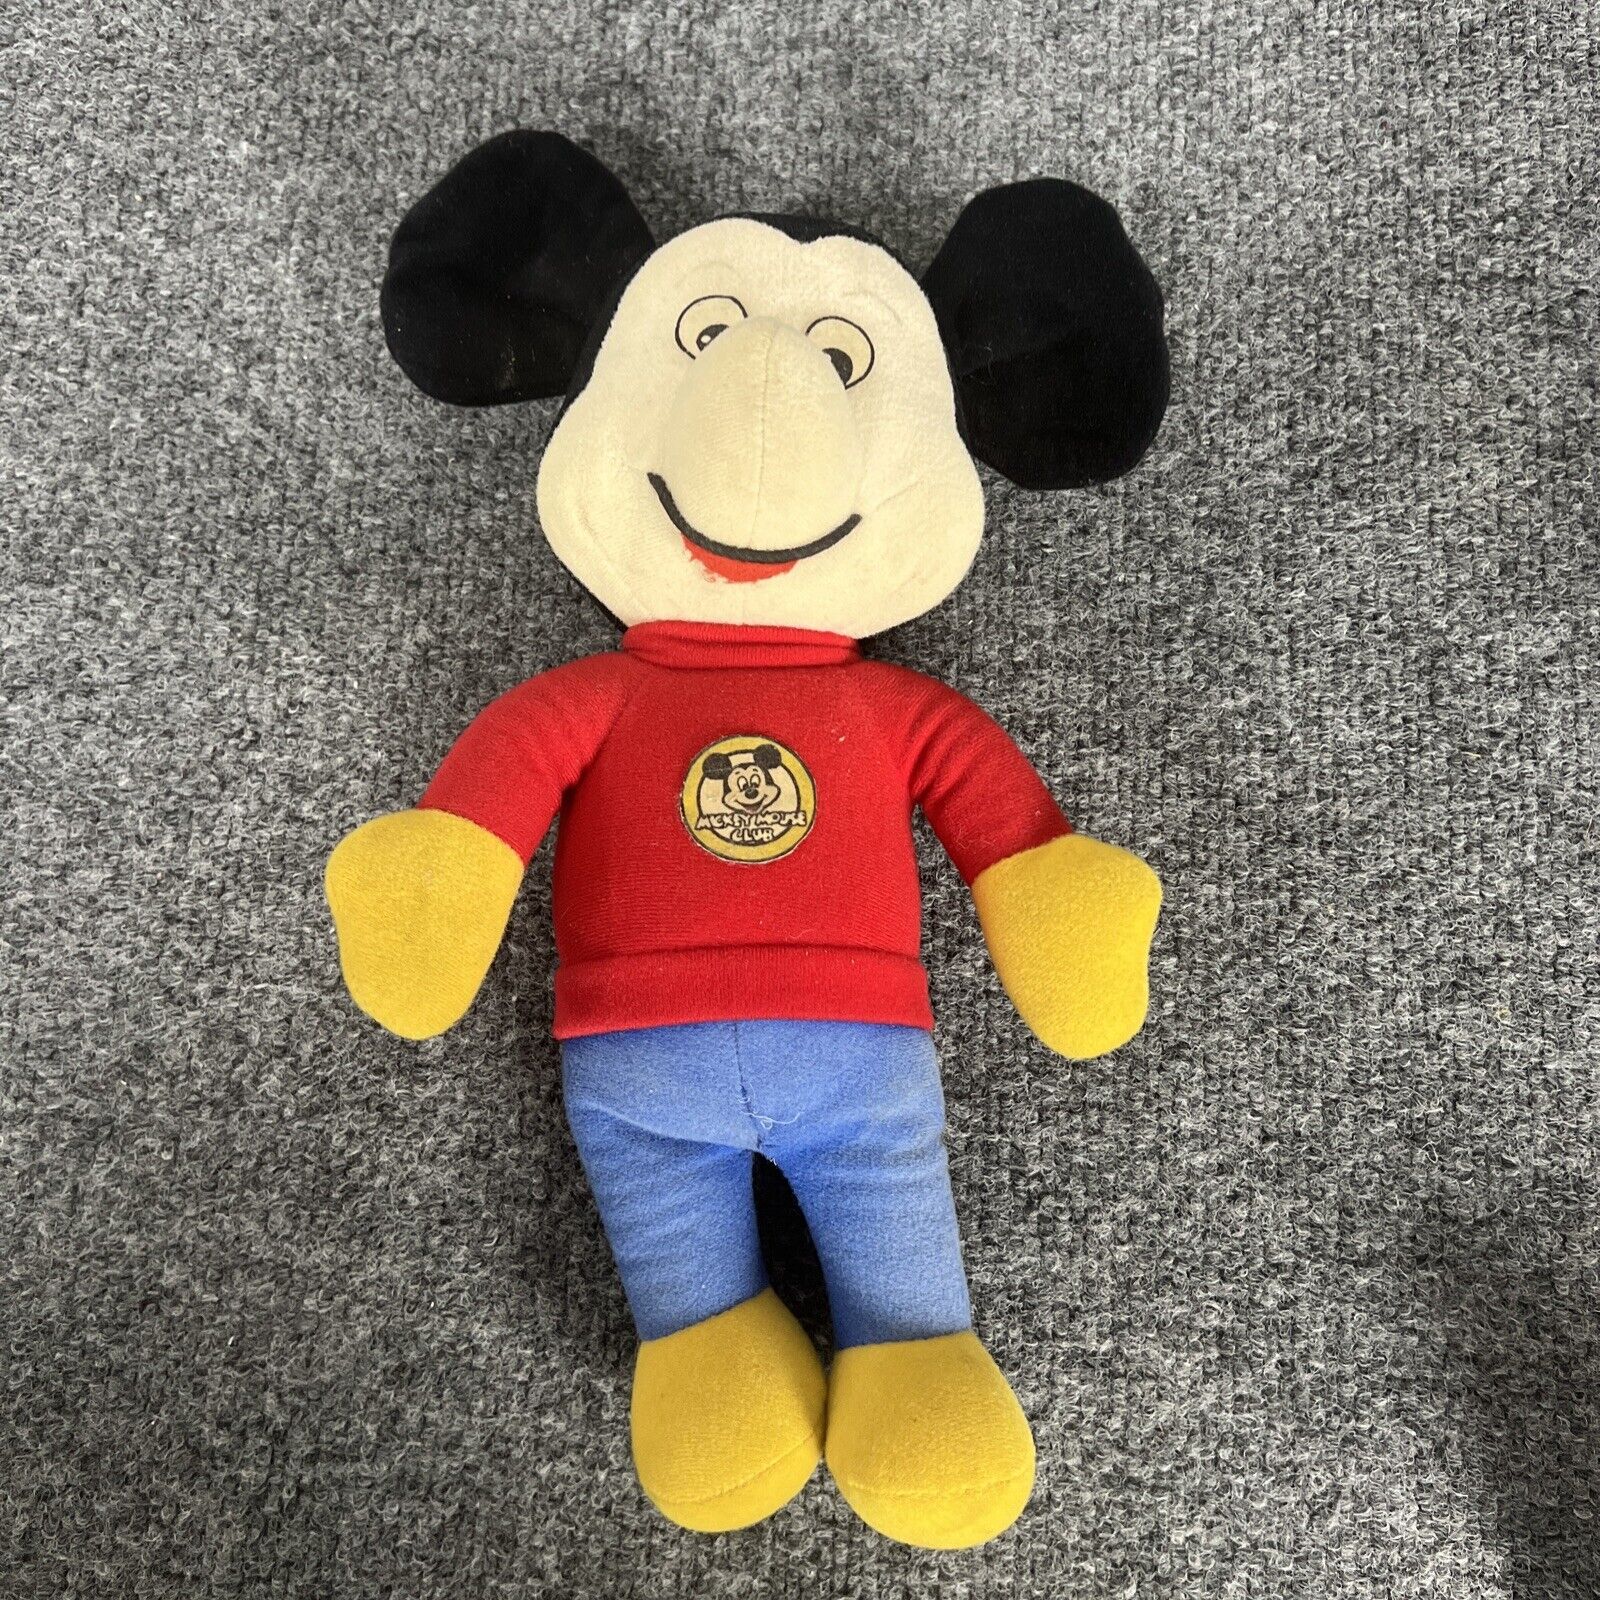 Mickey Mouse Club Vintage 1976 Plush Stuffed Animal Doll Knickerbocker Toy 12”